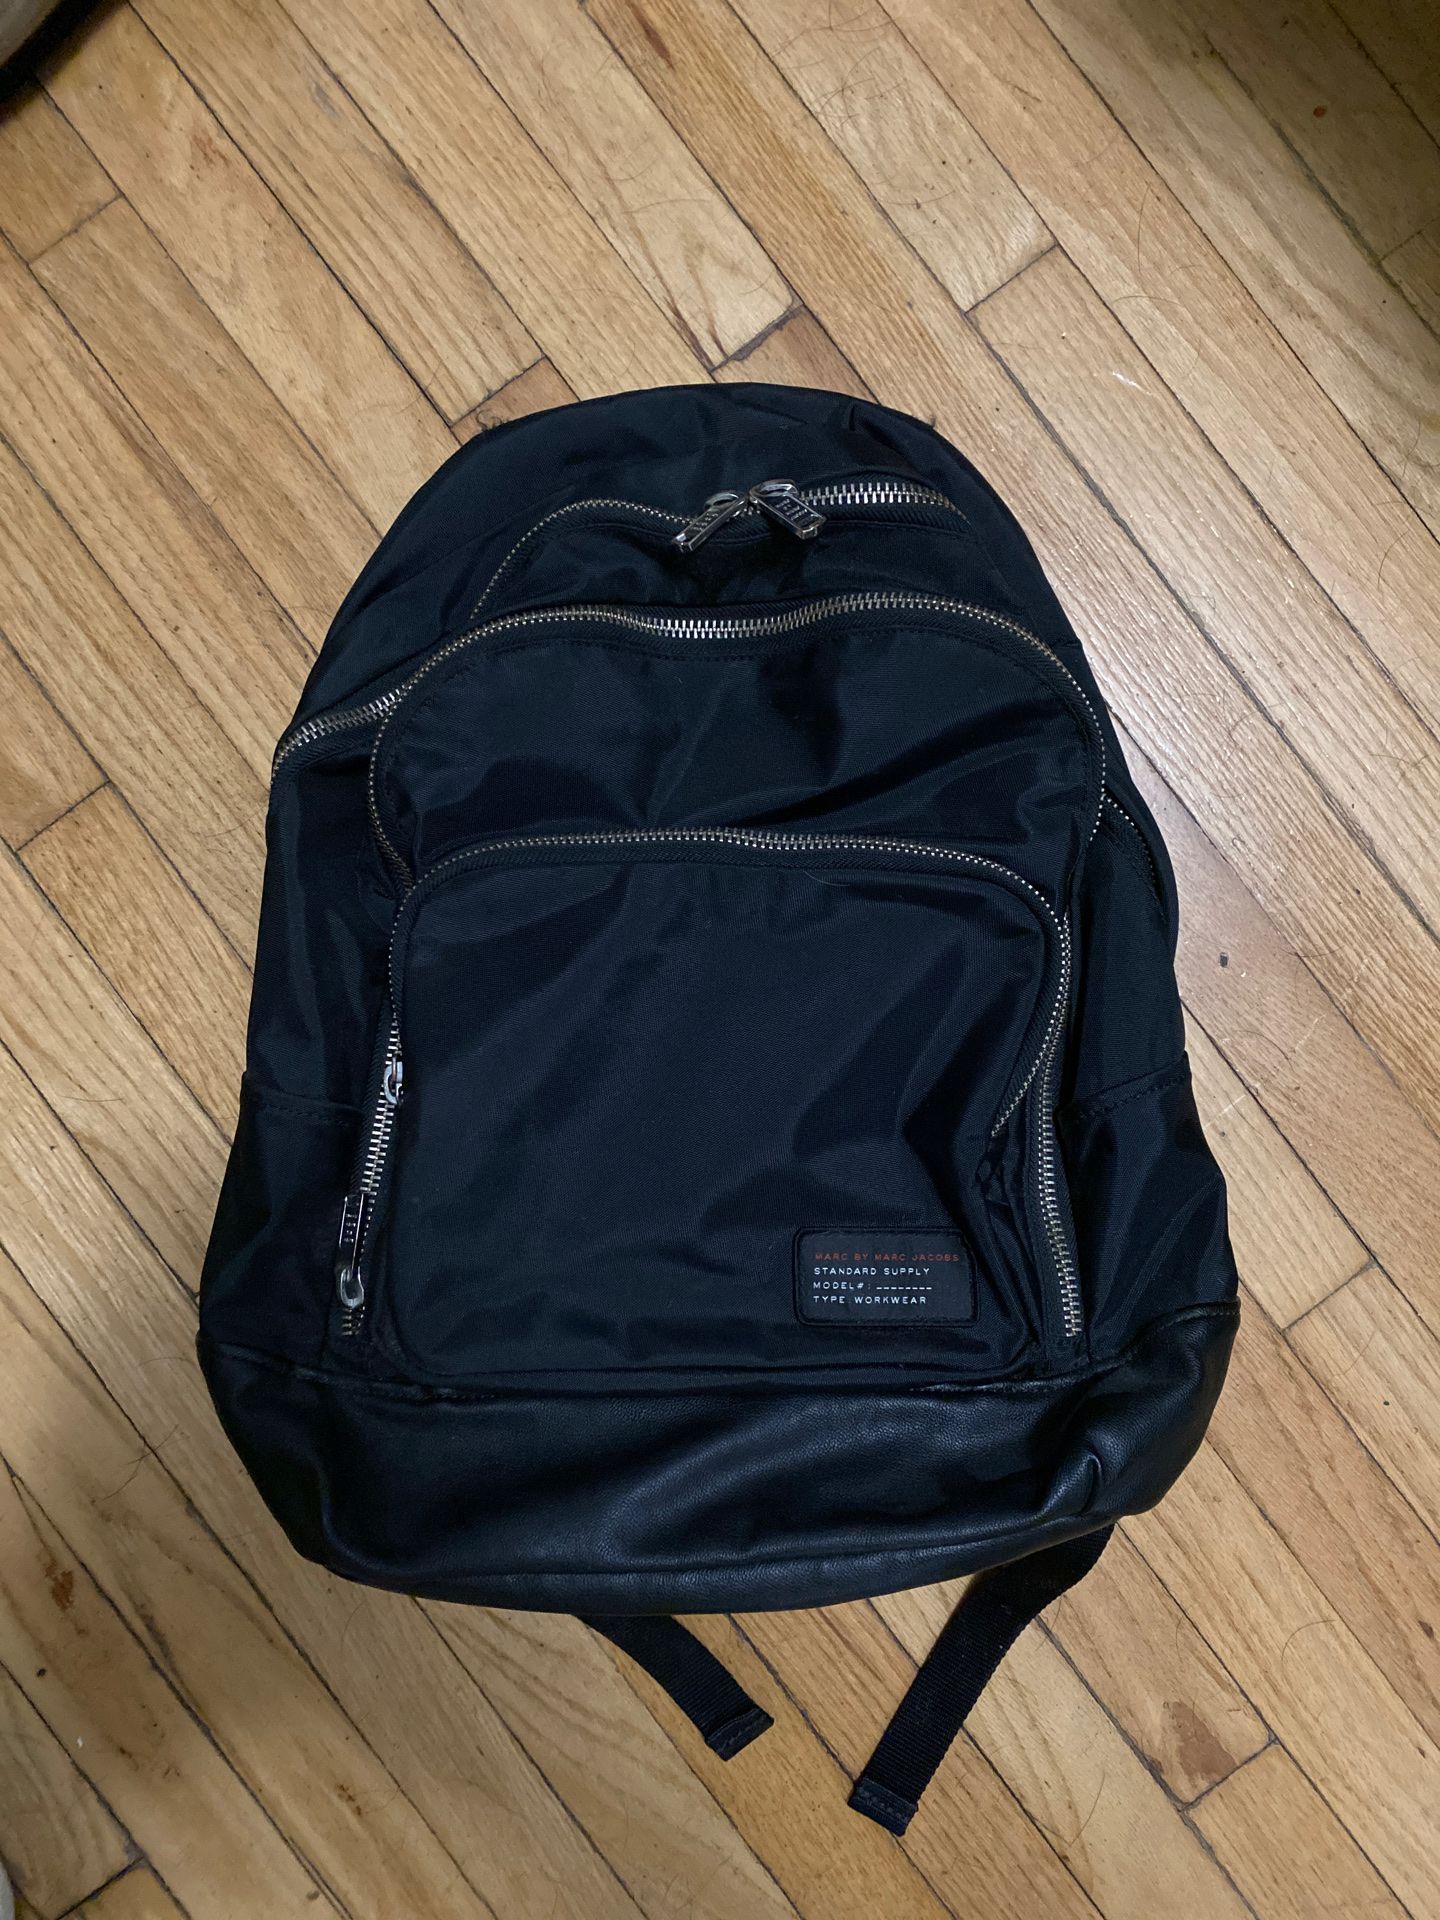 Marc Jacobs black backpack